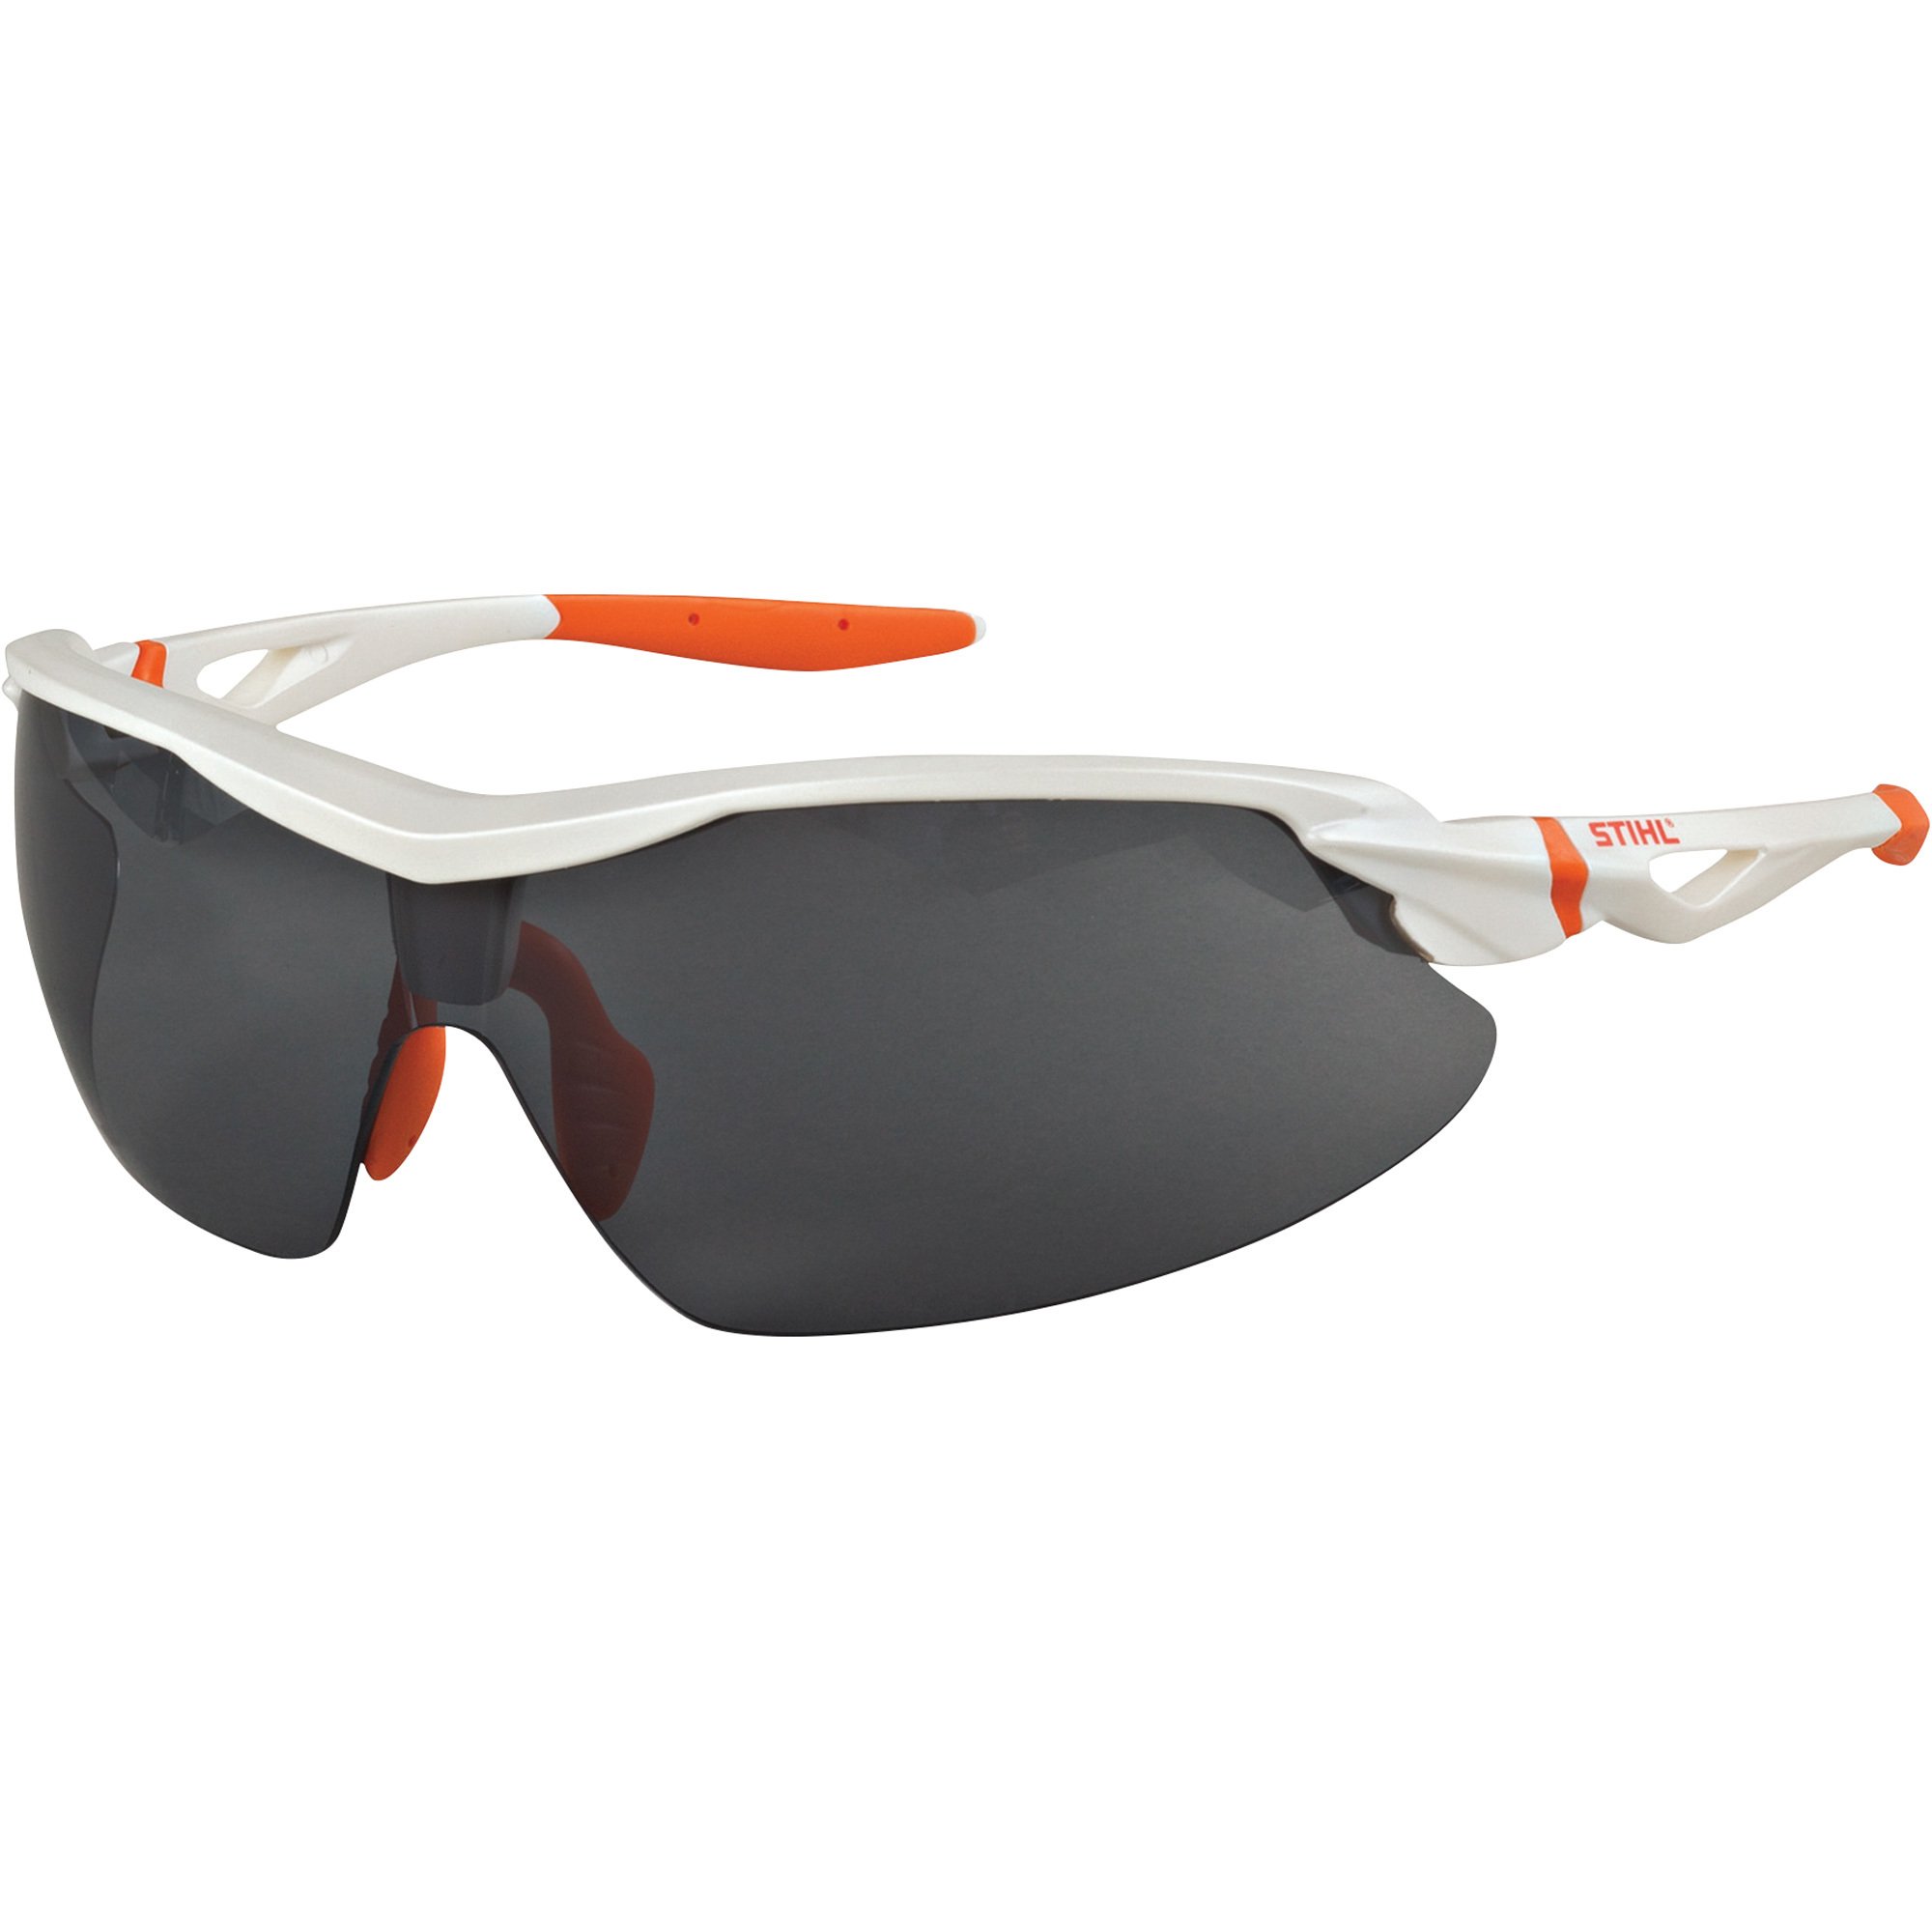 STIHL 2-Tone Sport Safety Glasses, Smoke Lenses, Model# 7010 884 0369